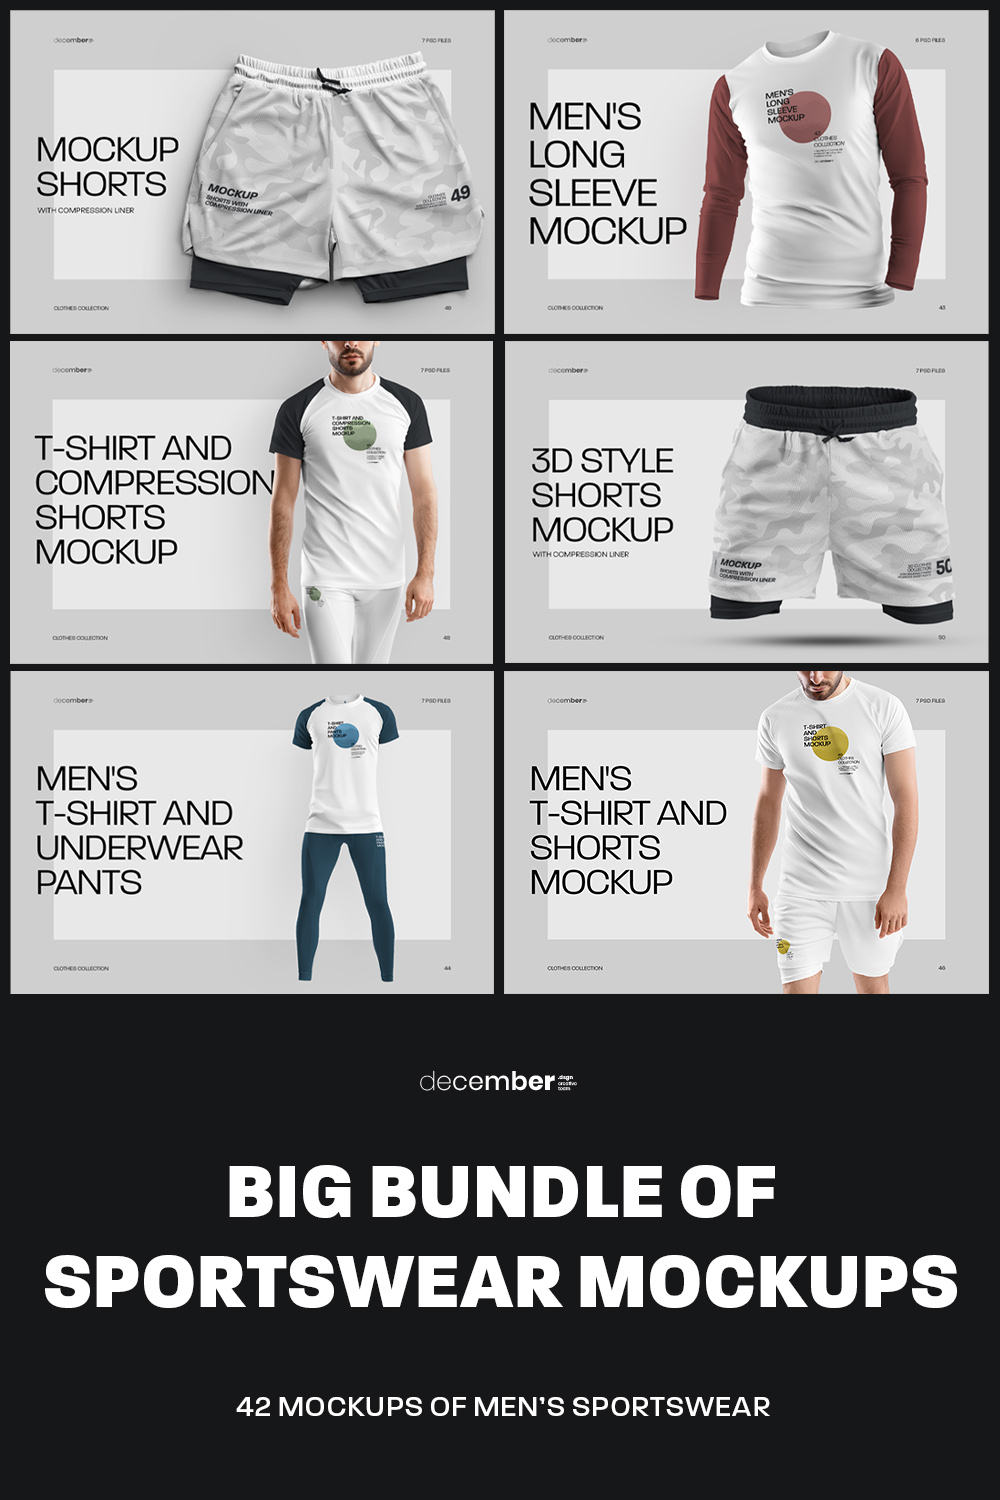 Big Bundle Sportswear Man Mockups Pinterest Image.